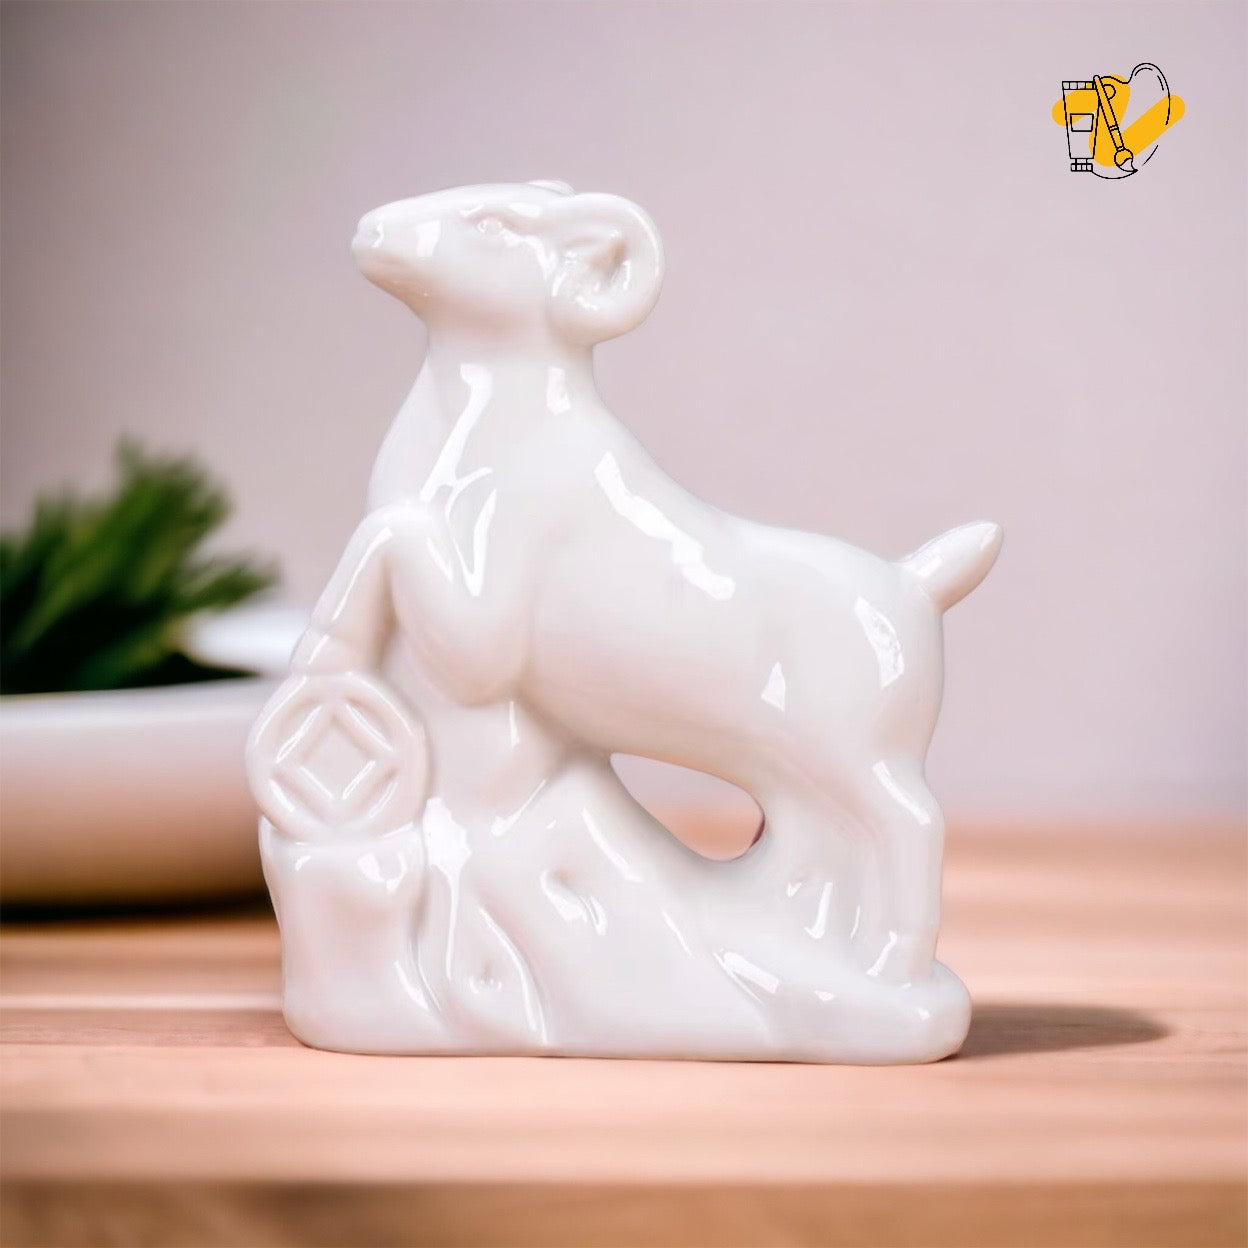 Chinese Zodiac Figurine